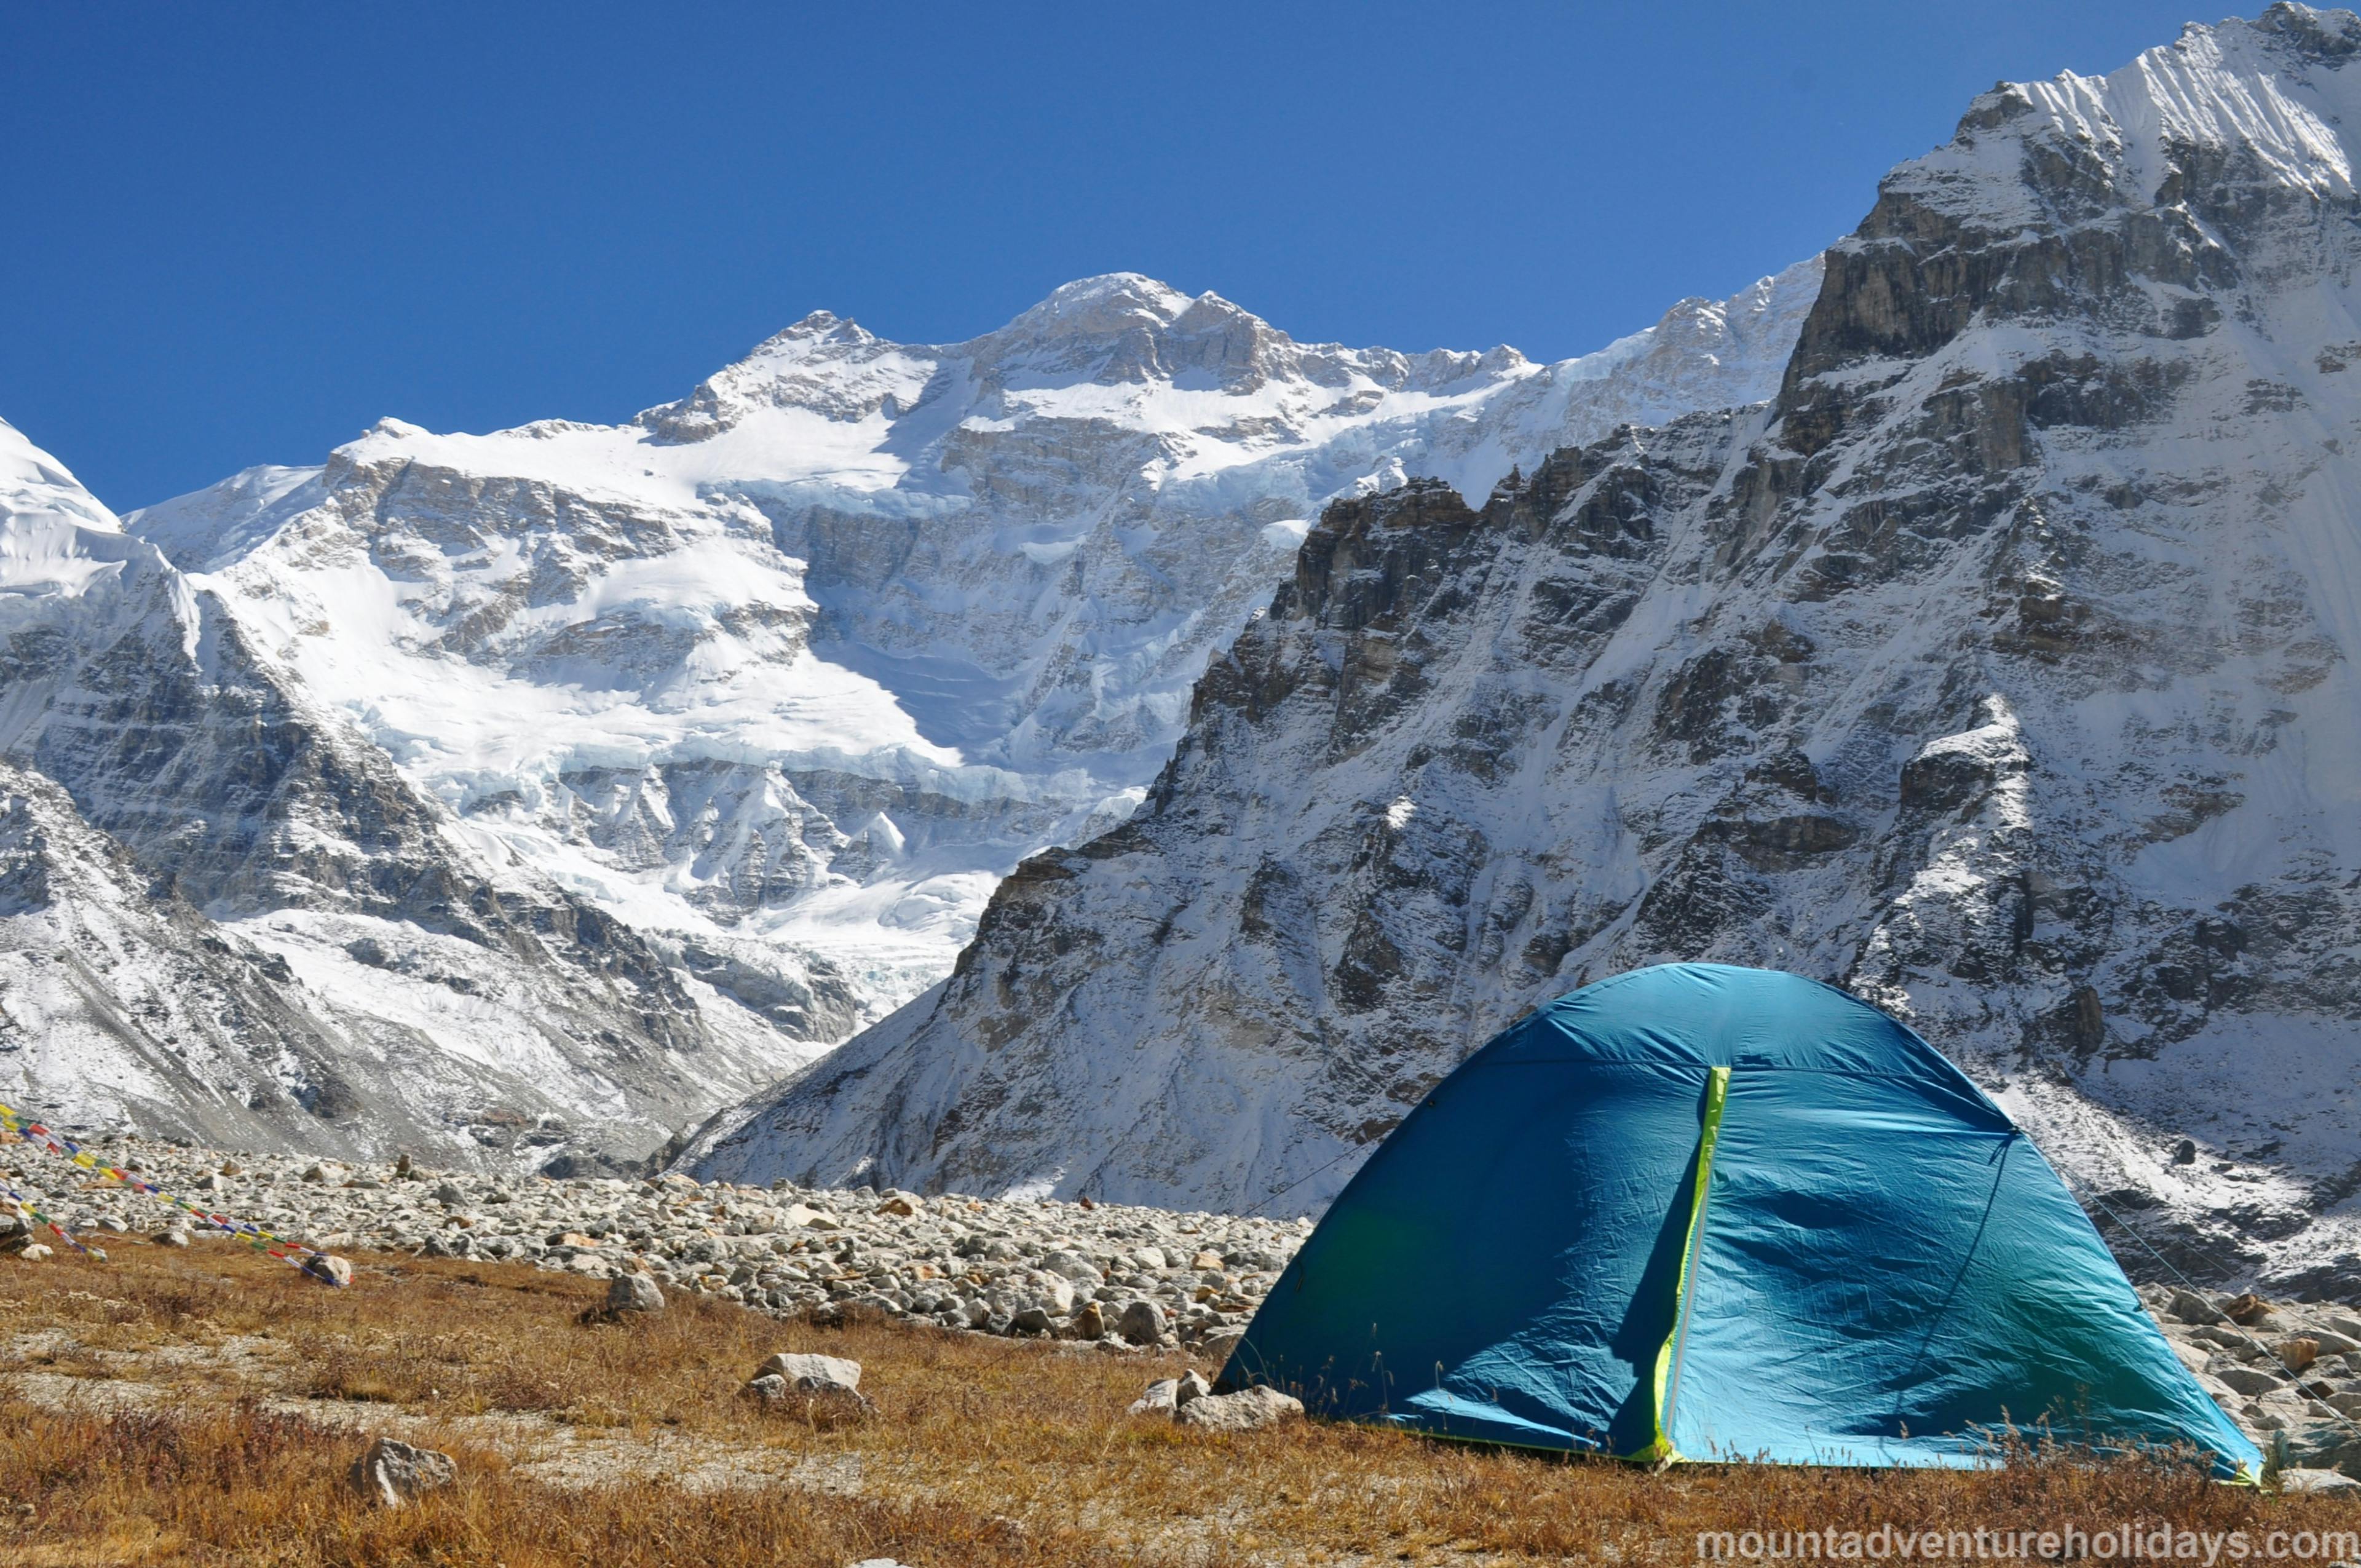 Camping near the base camp of mount Kanchenjunga